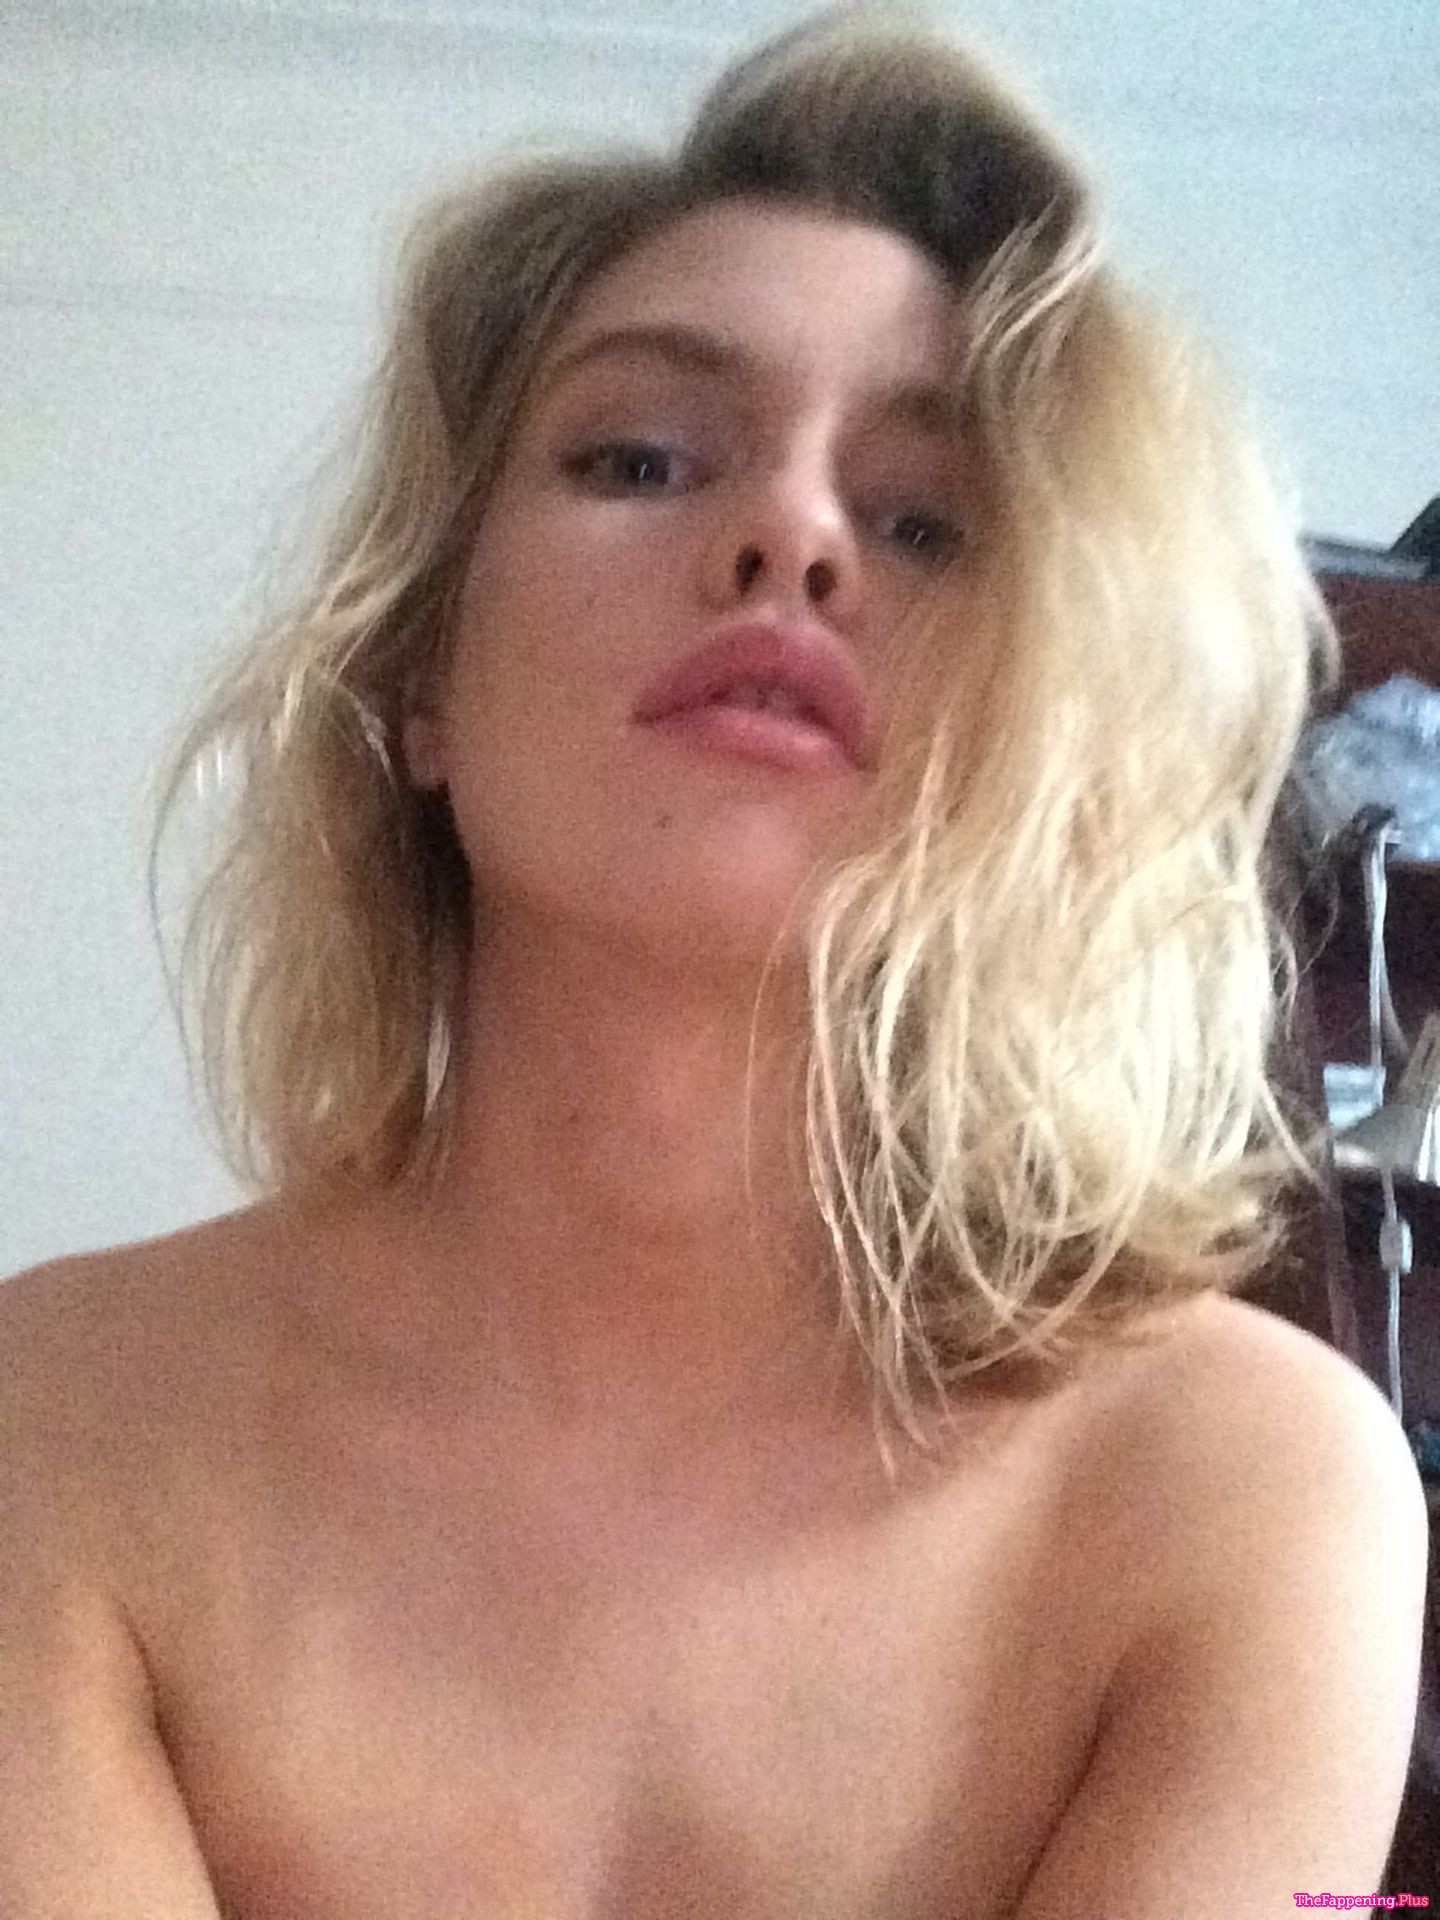 Stella maxwell nude pic